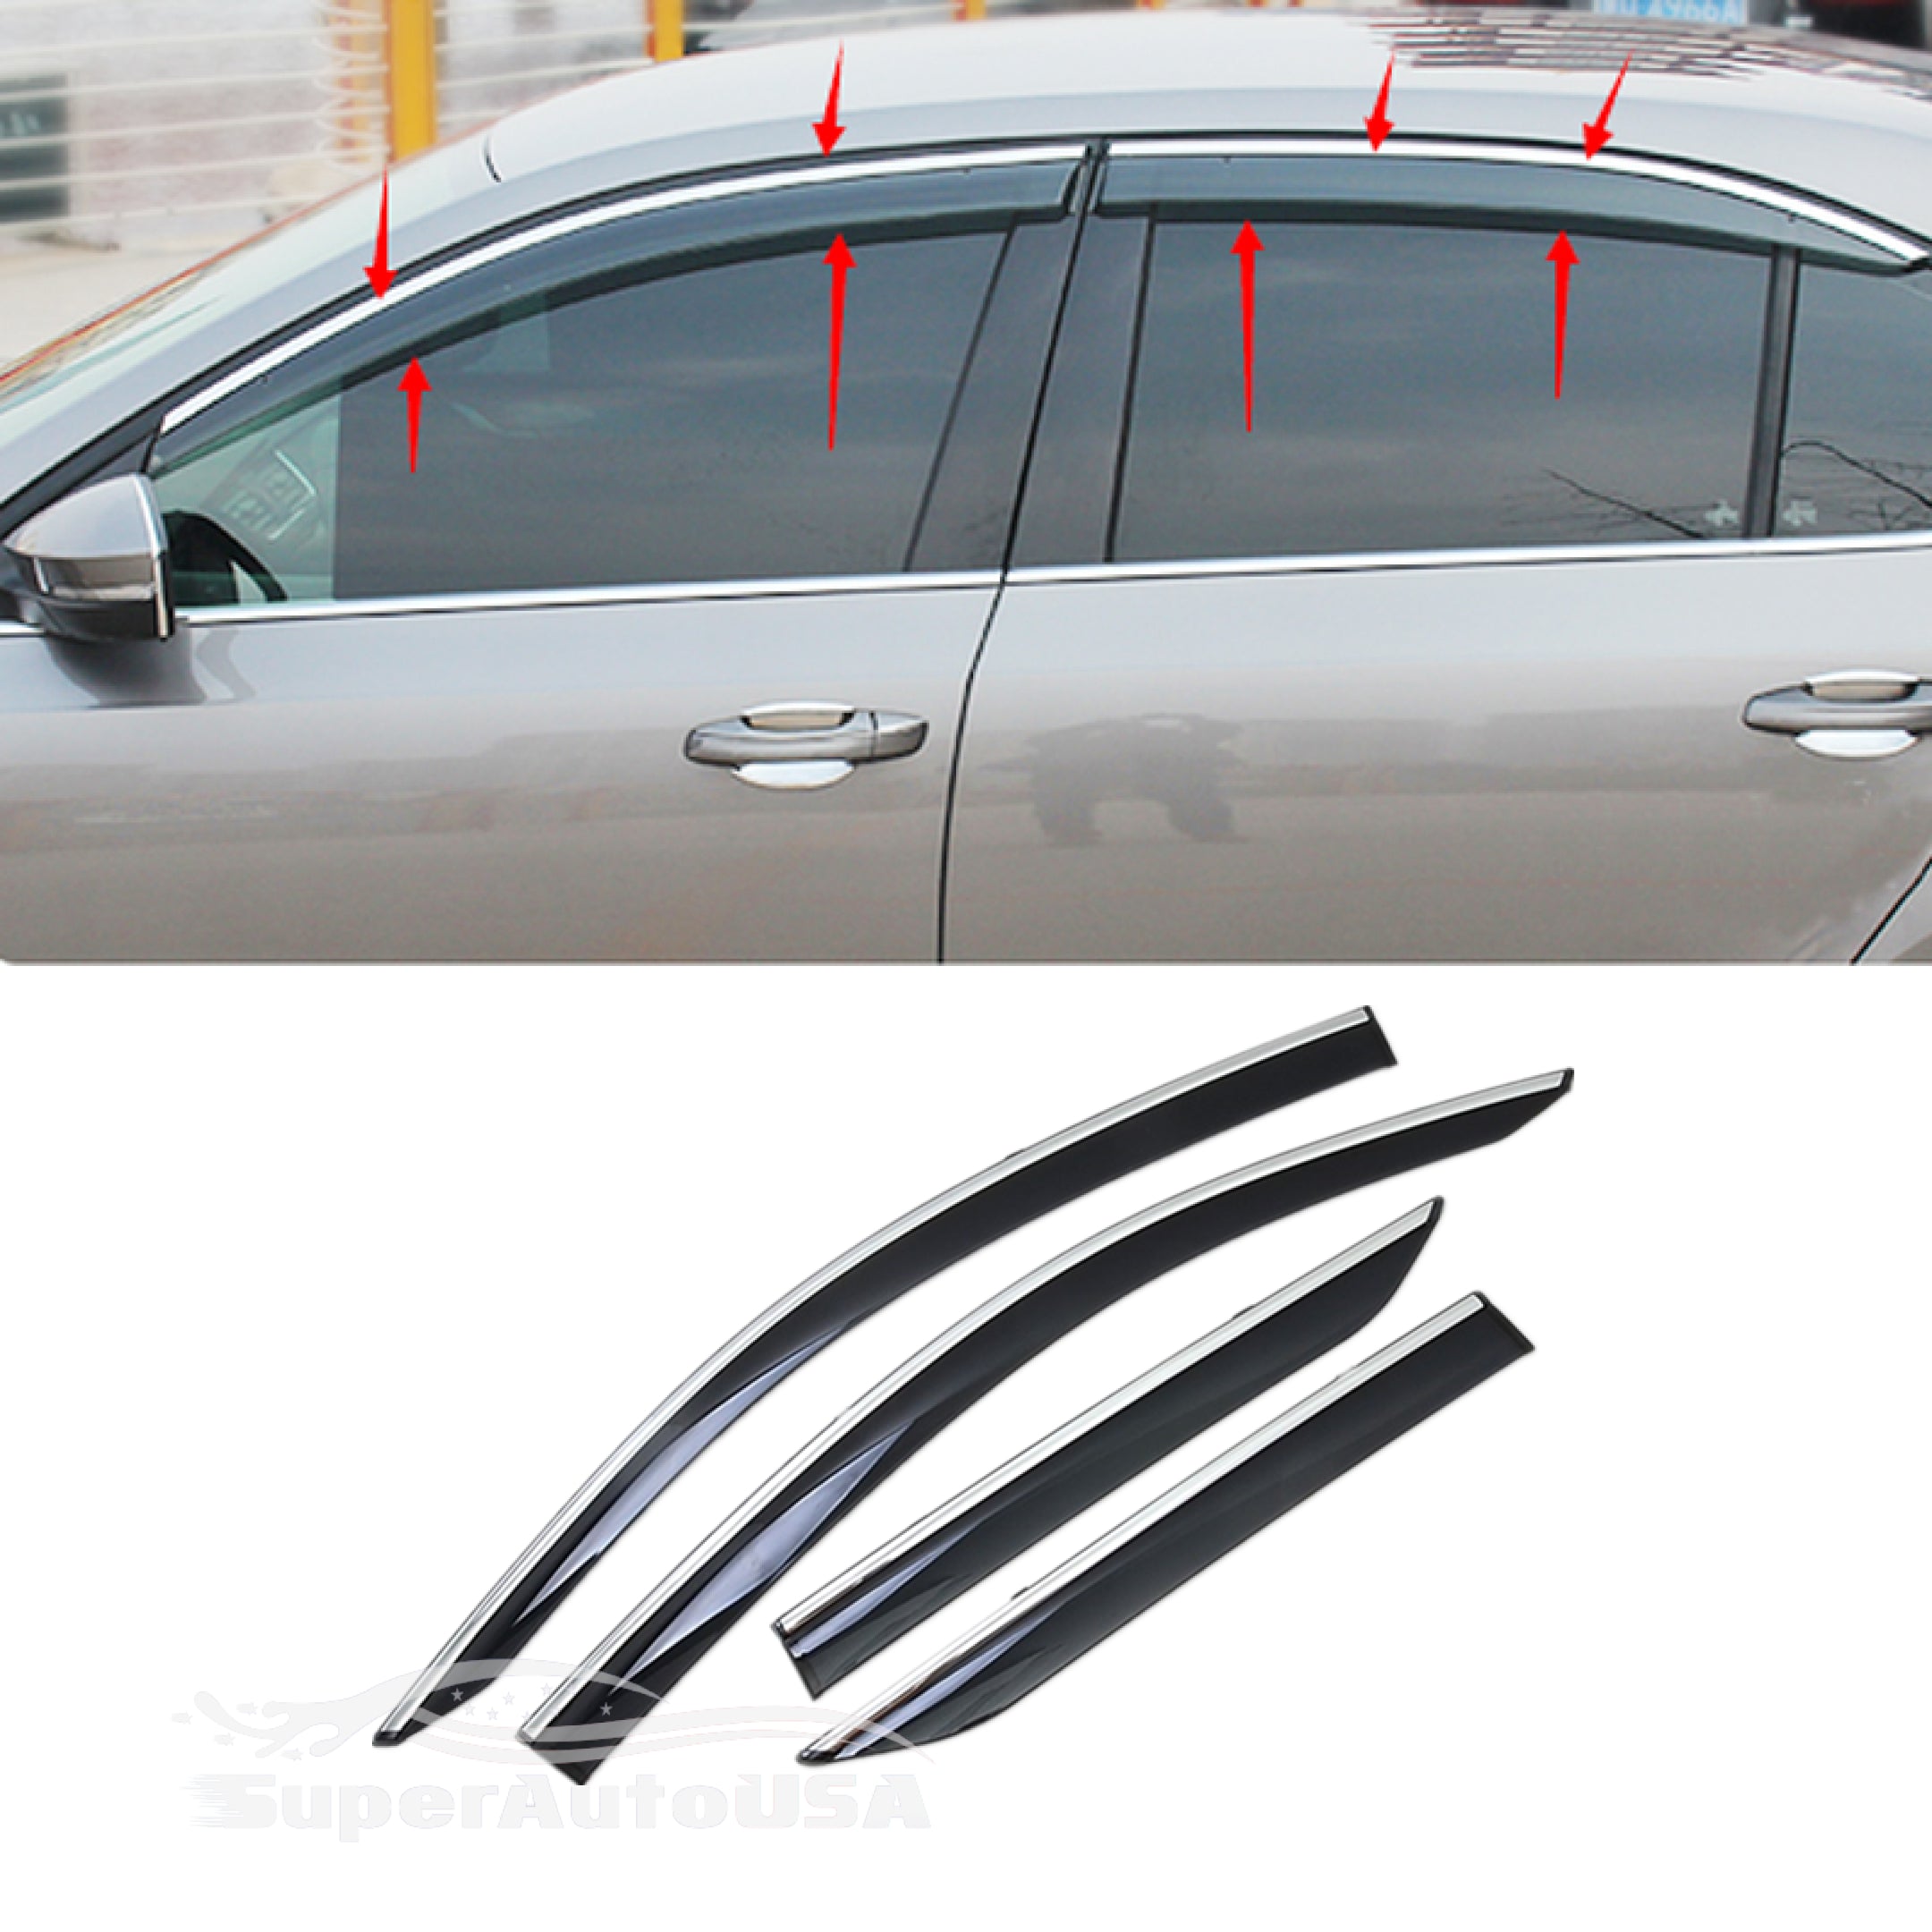 For Hyundai Santa Fe 2013-2019 XL Clip-On Chrome Trim Vent Window Visors Rain Sun Wind Guards Shade Deflectors